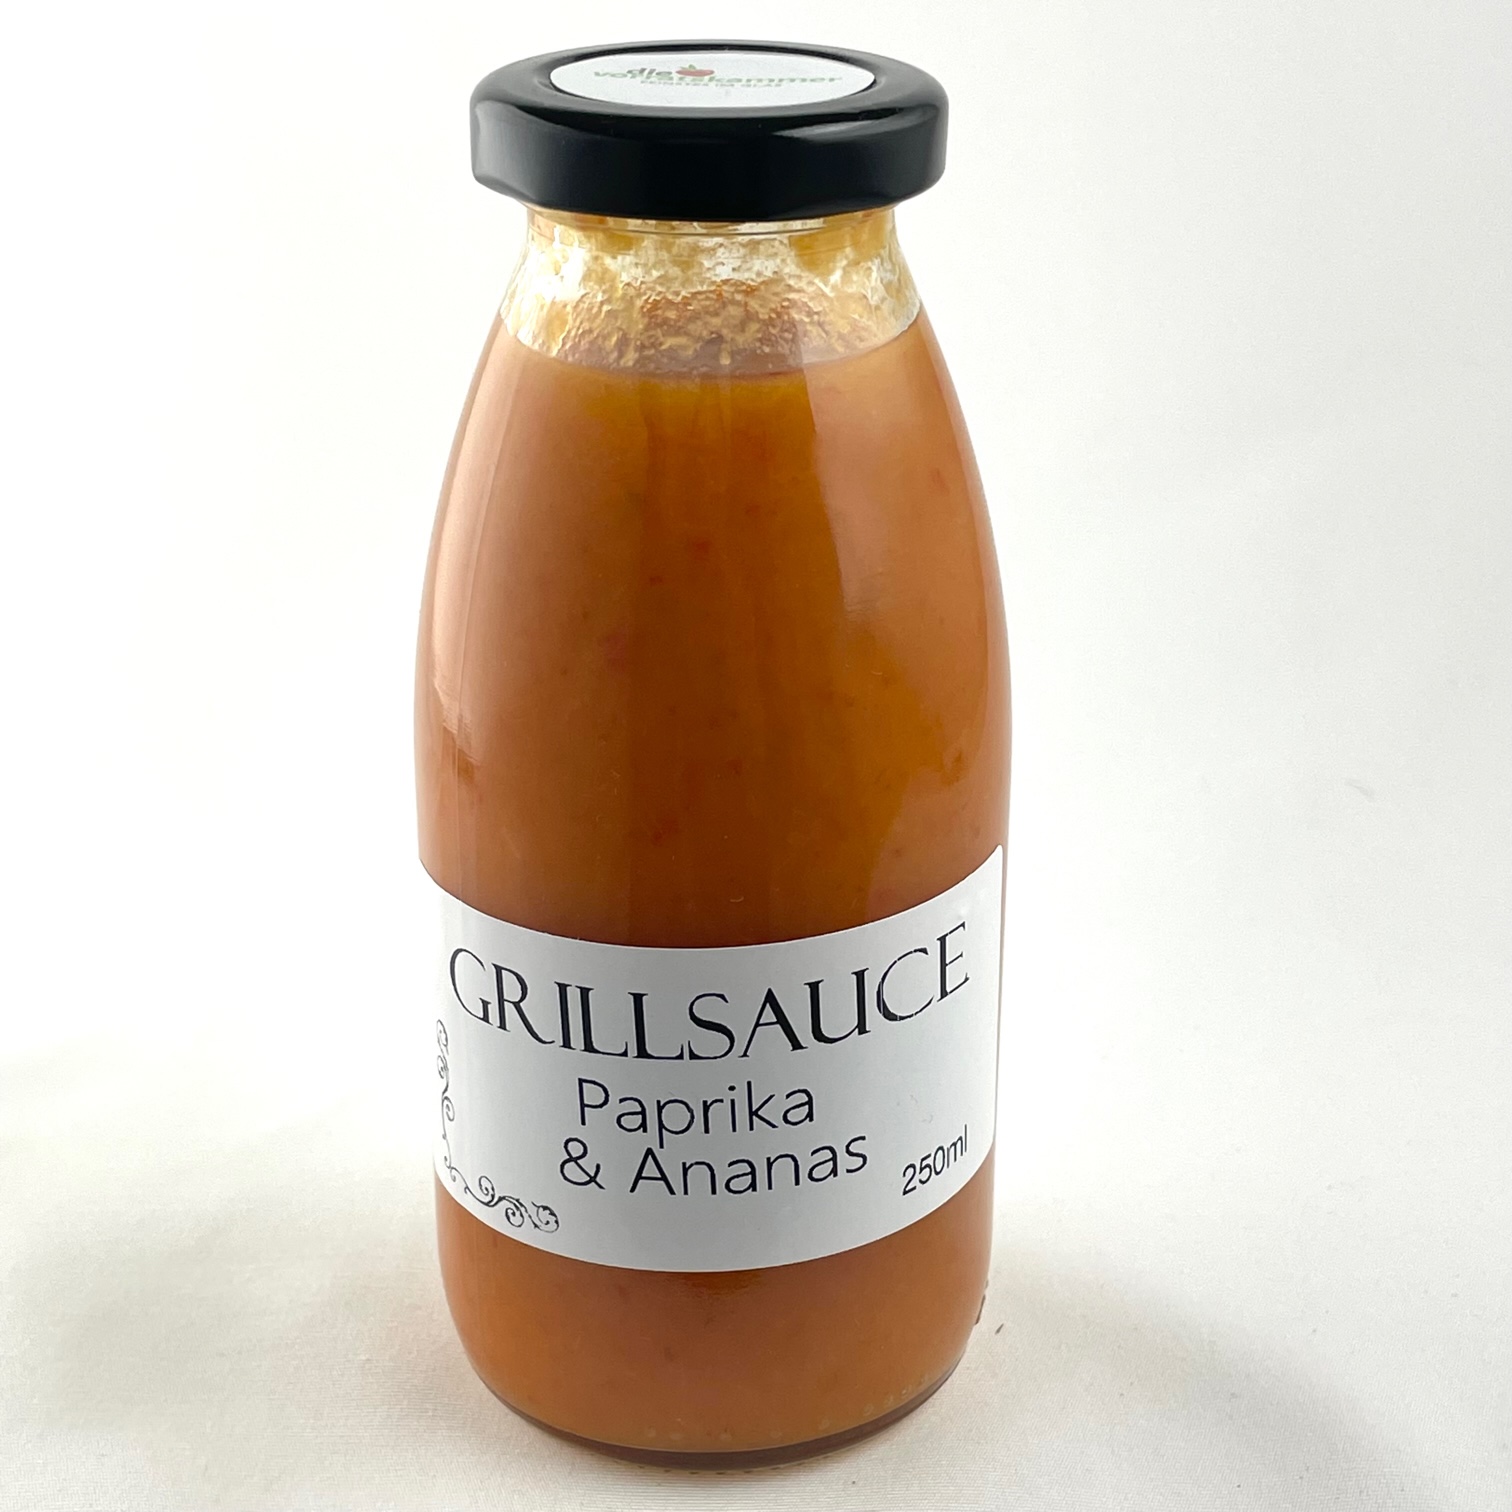 Grillsauce Paprika & Ananas